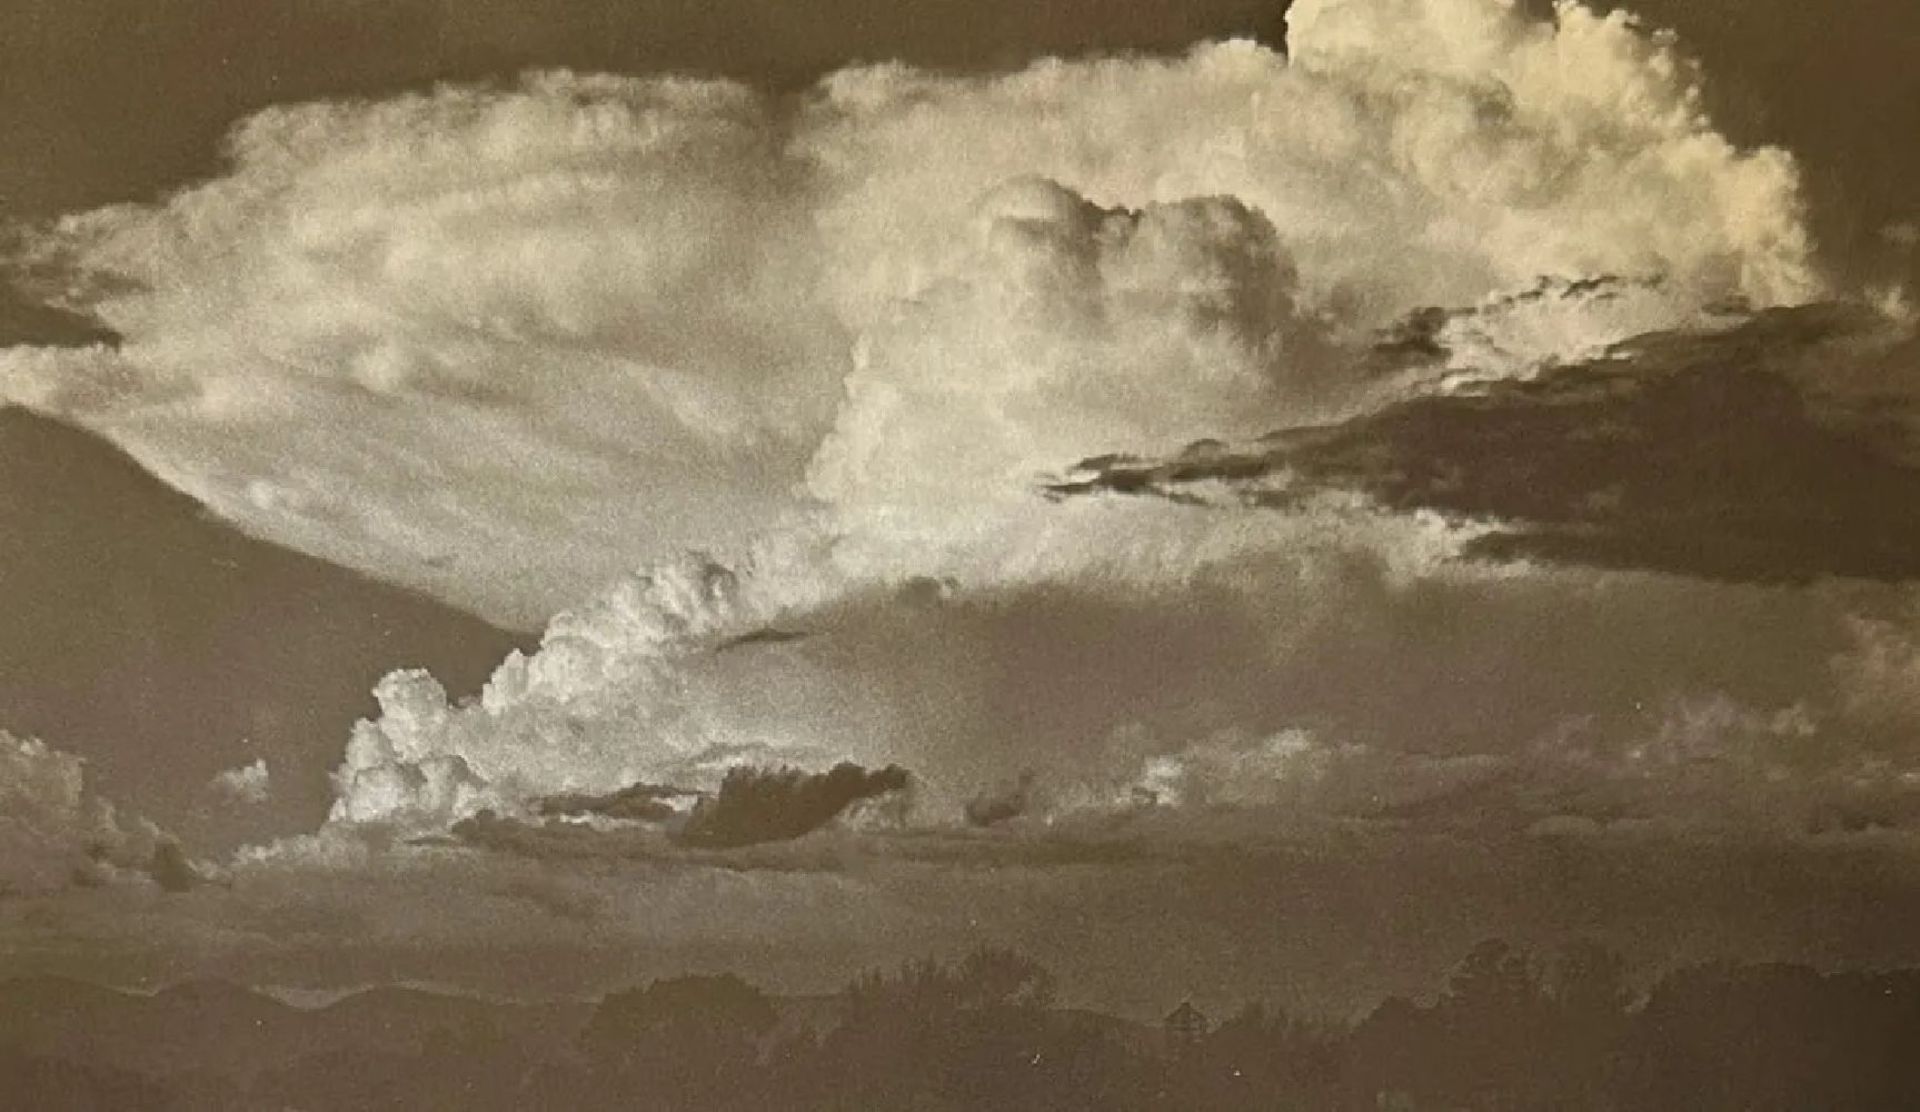 Edward Weston "Untitled" Print